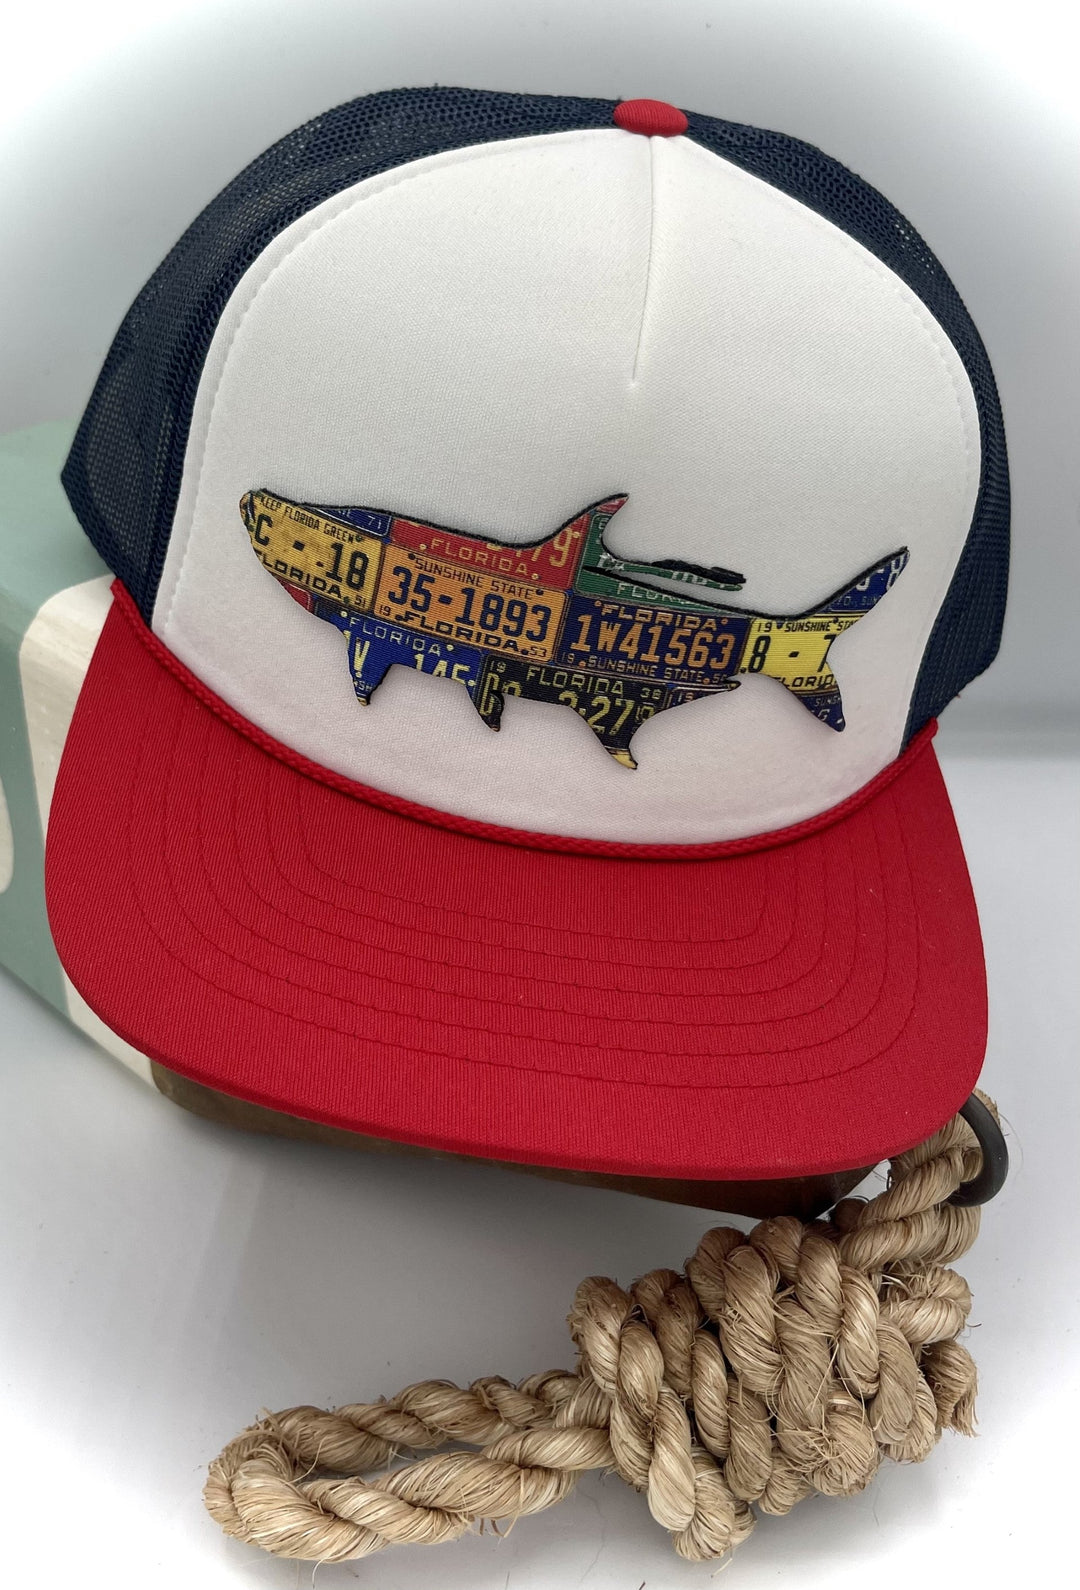 Antique Florida Tarpon Hat Collection